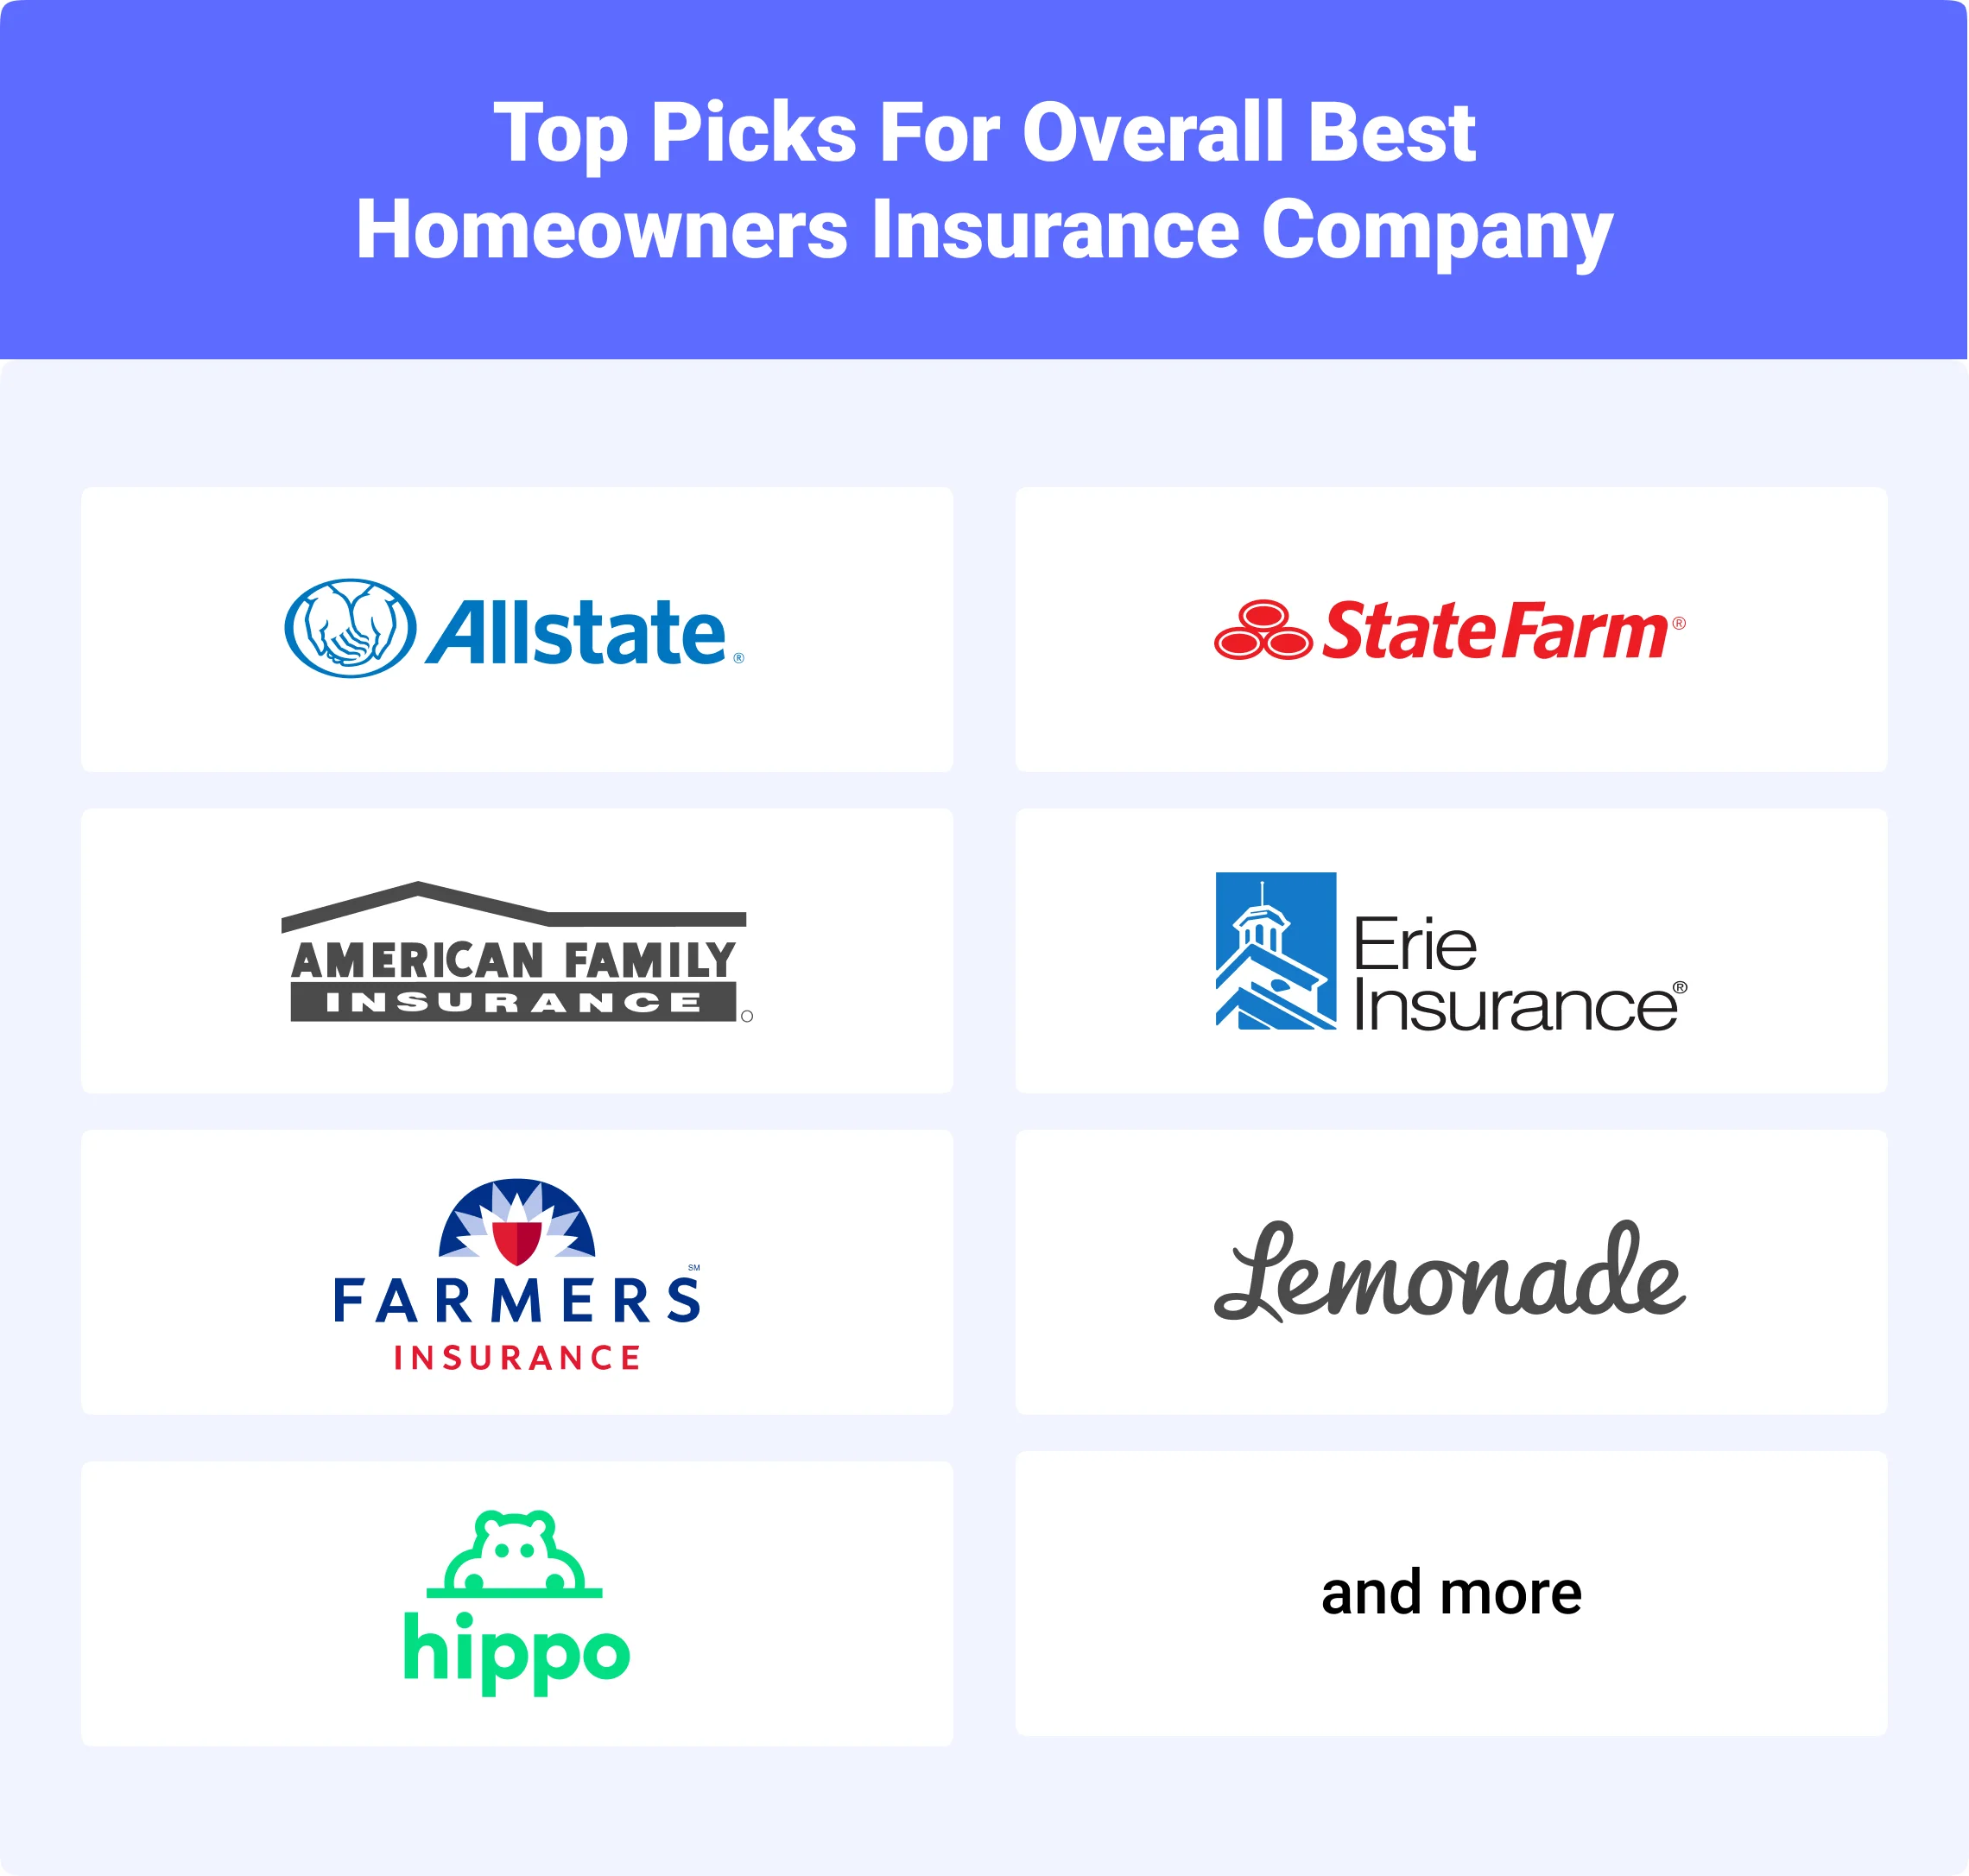 Best Home Insurance Company Top Picks